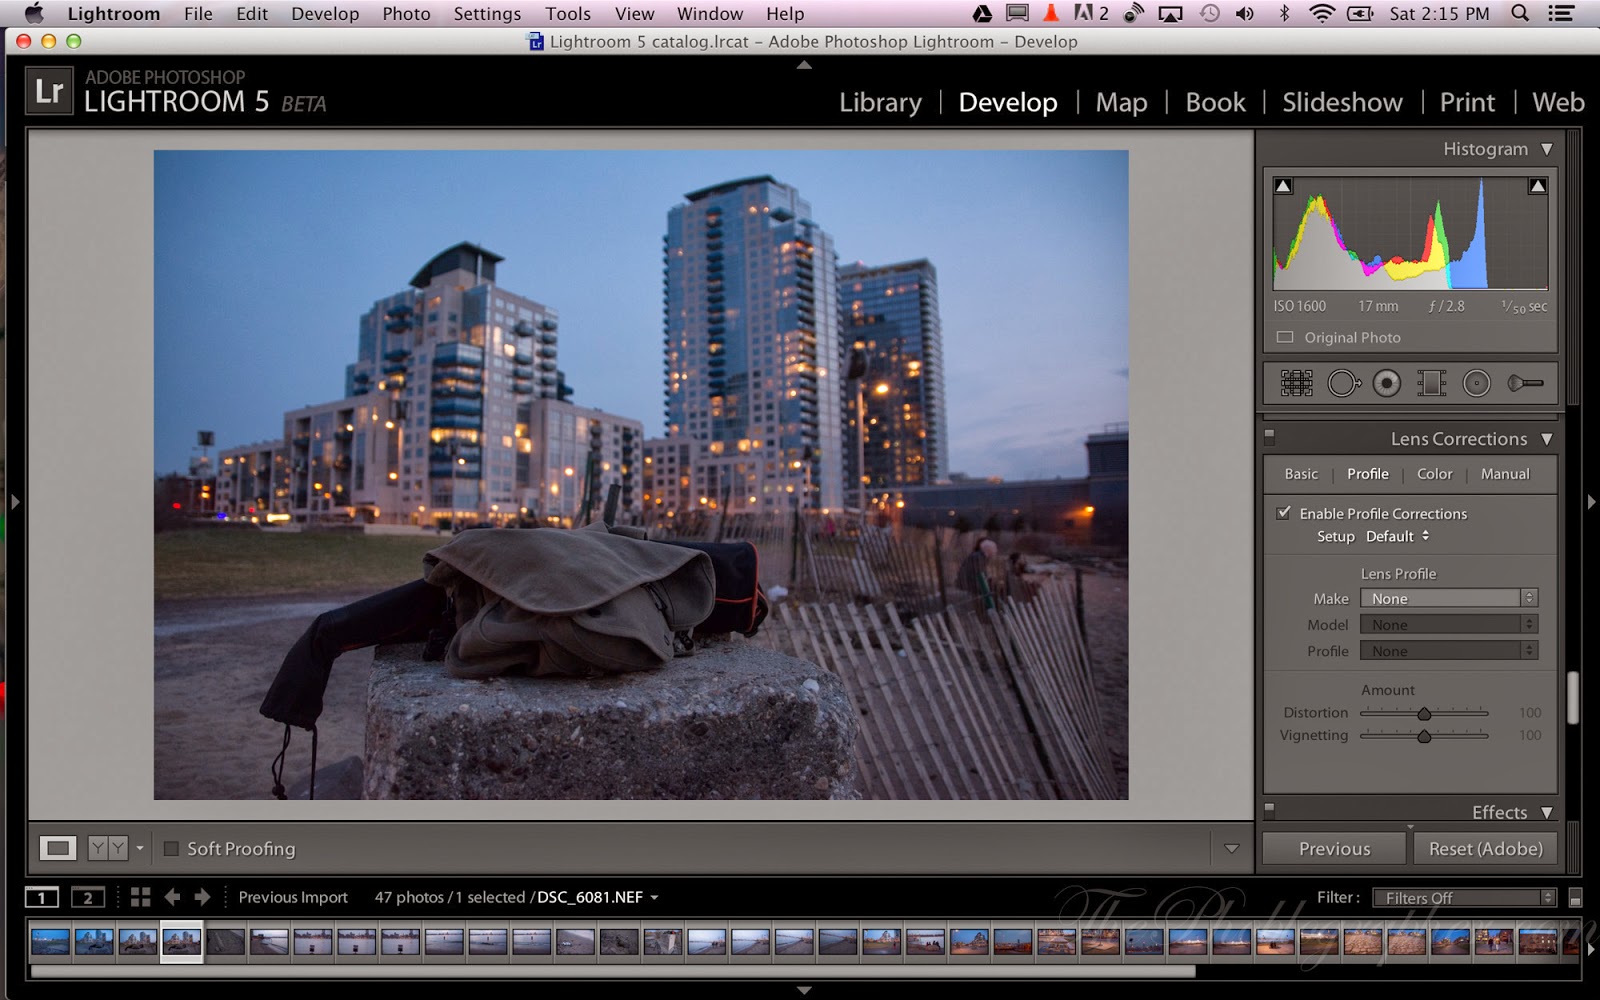 Adobe photoshop cs6 full version free download for mac os x